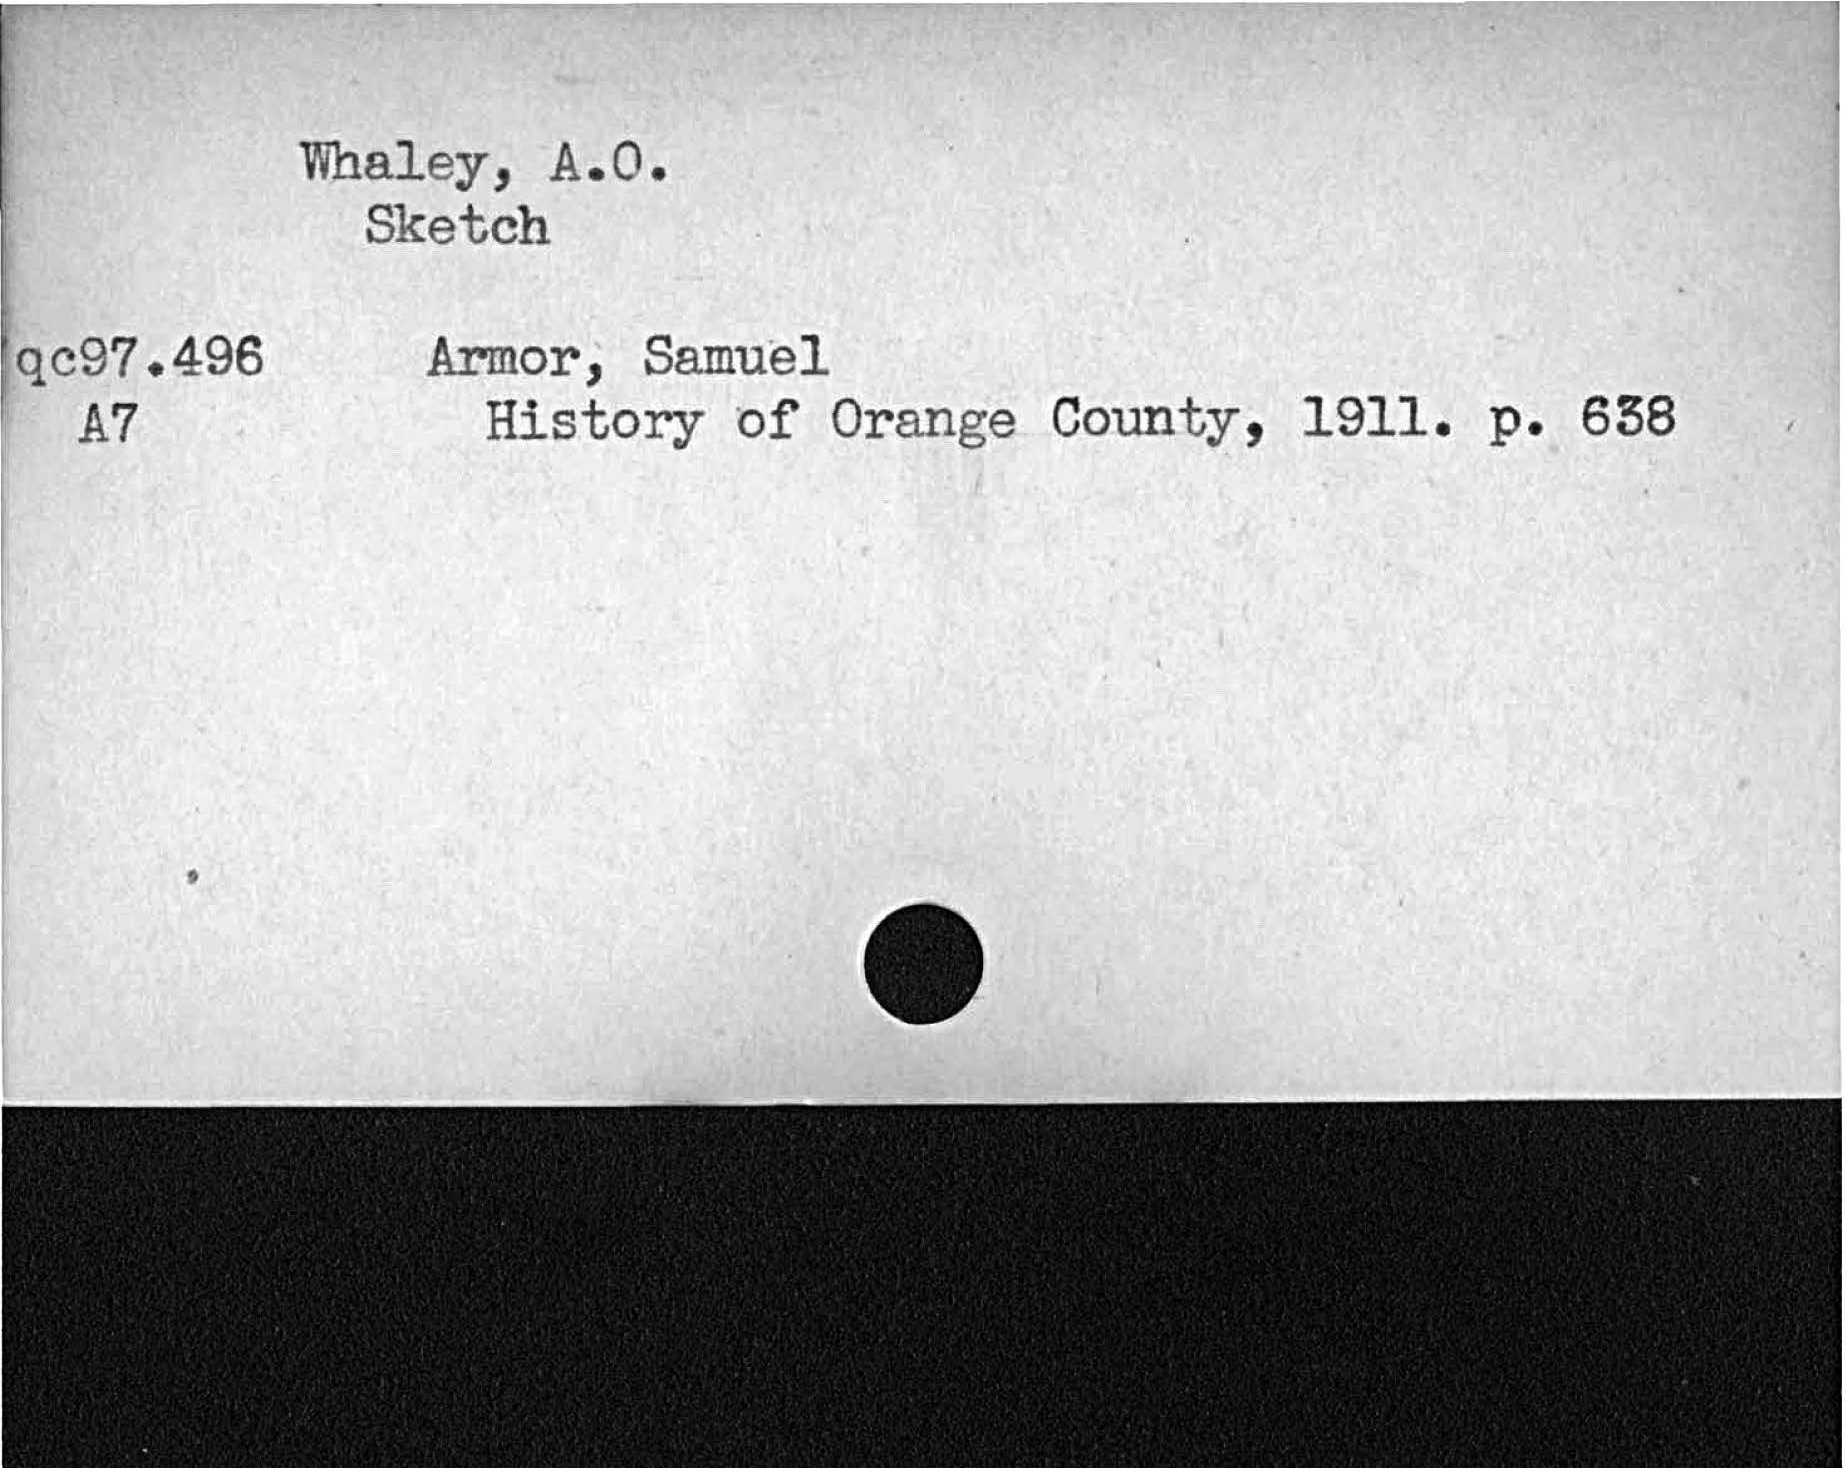 Whaley, A. O.SketchArmor, SamuelRisto of Orange County, 1911. p. 638,   qc97. 496  A7